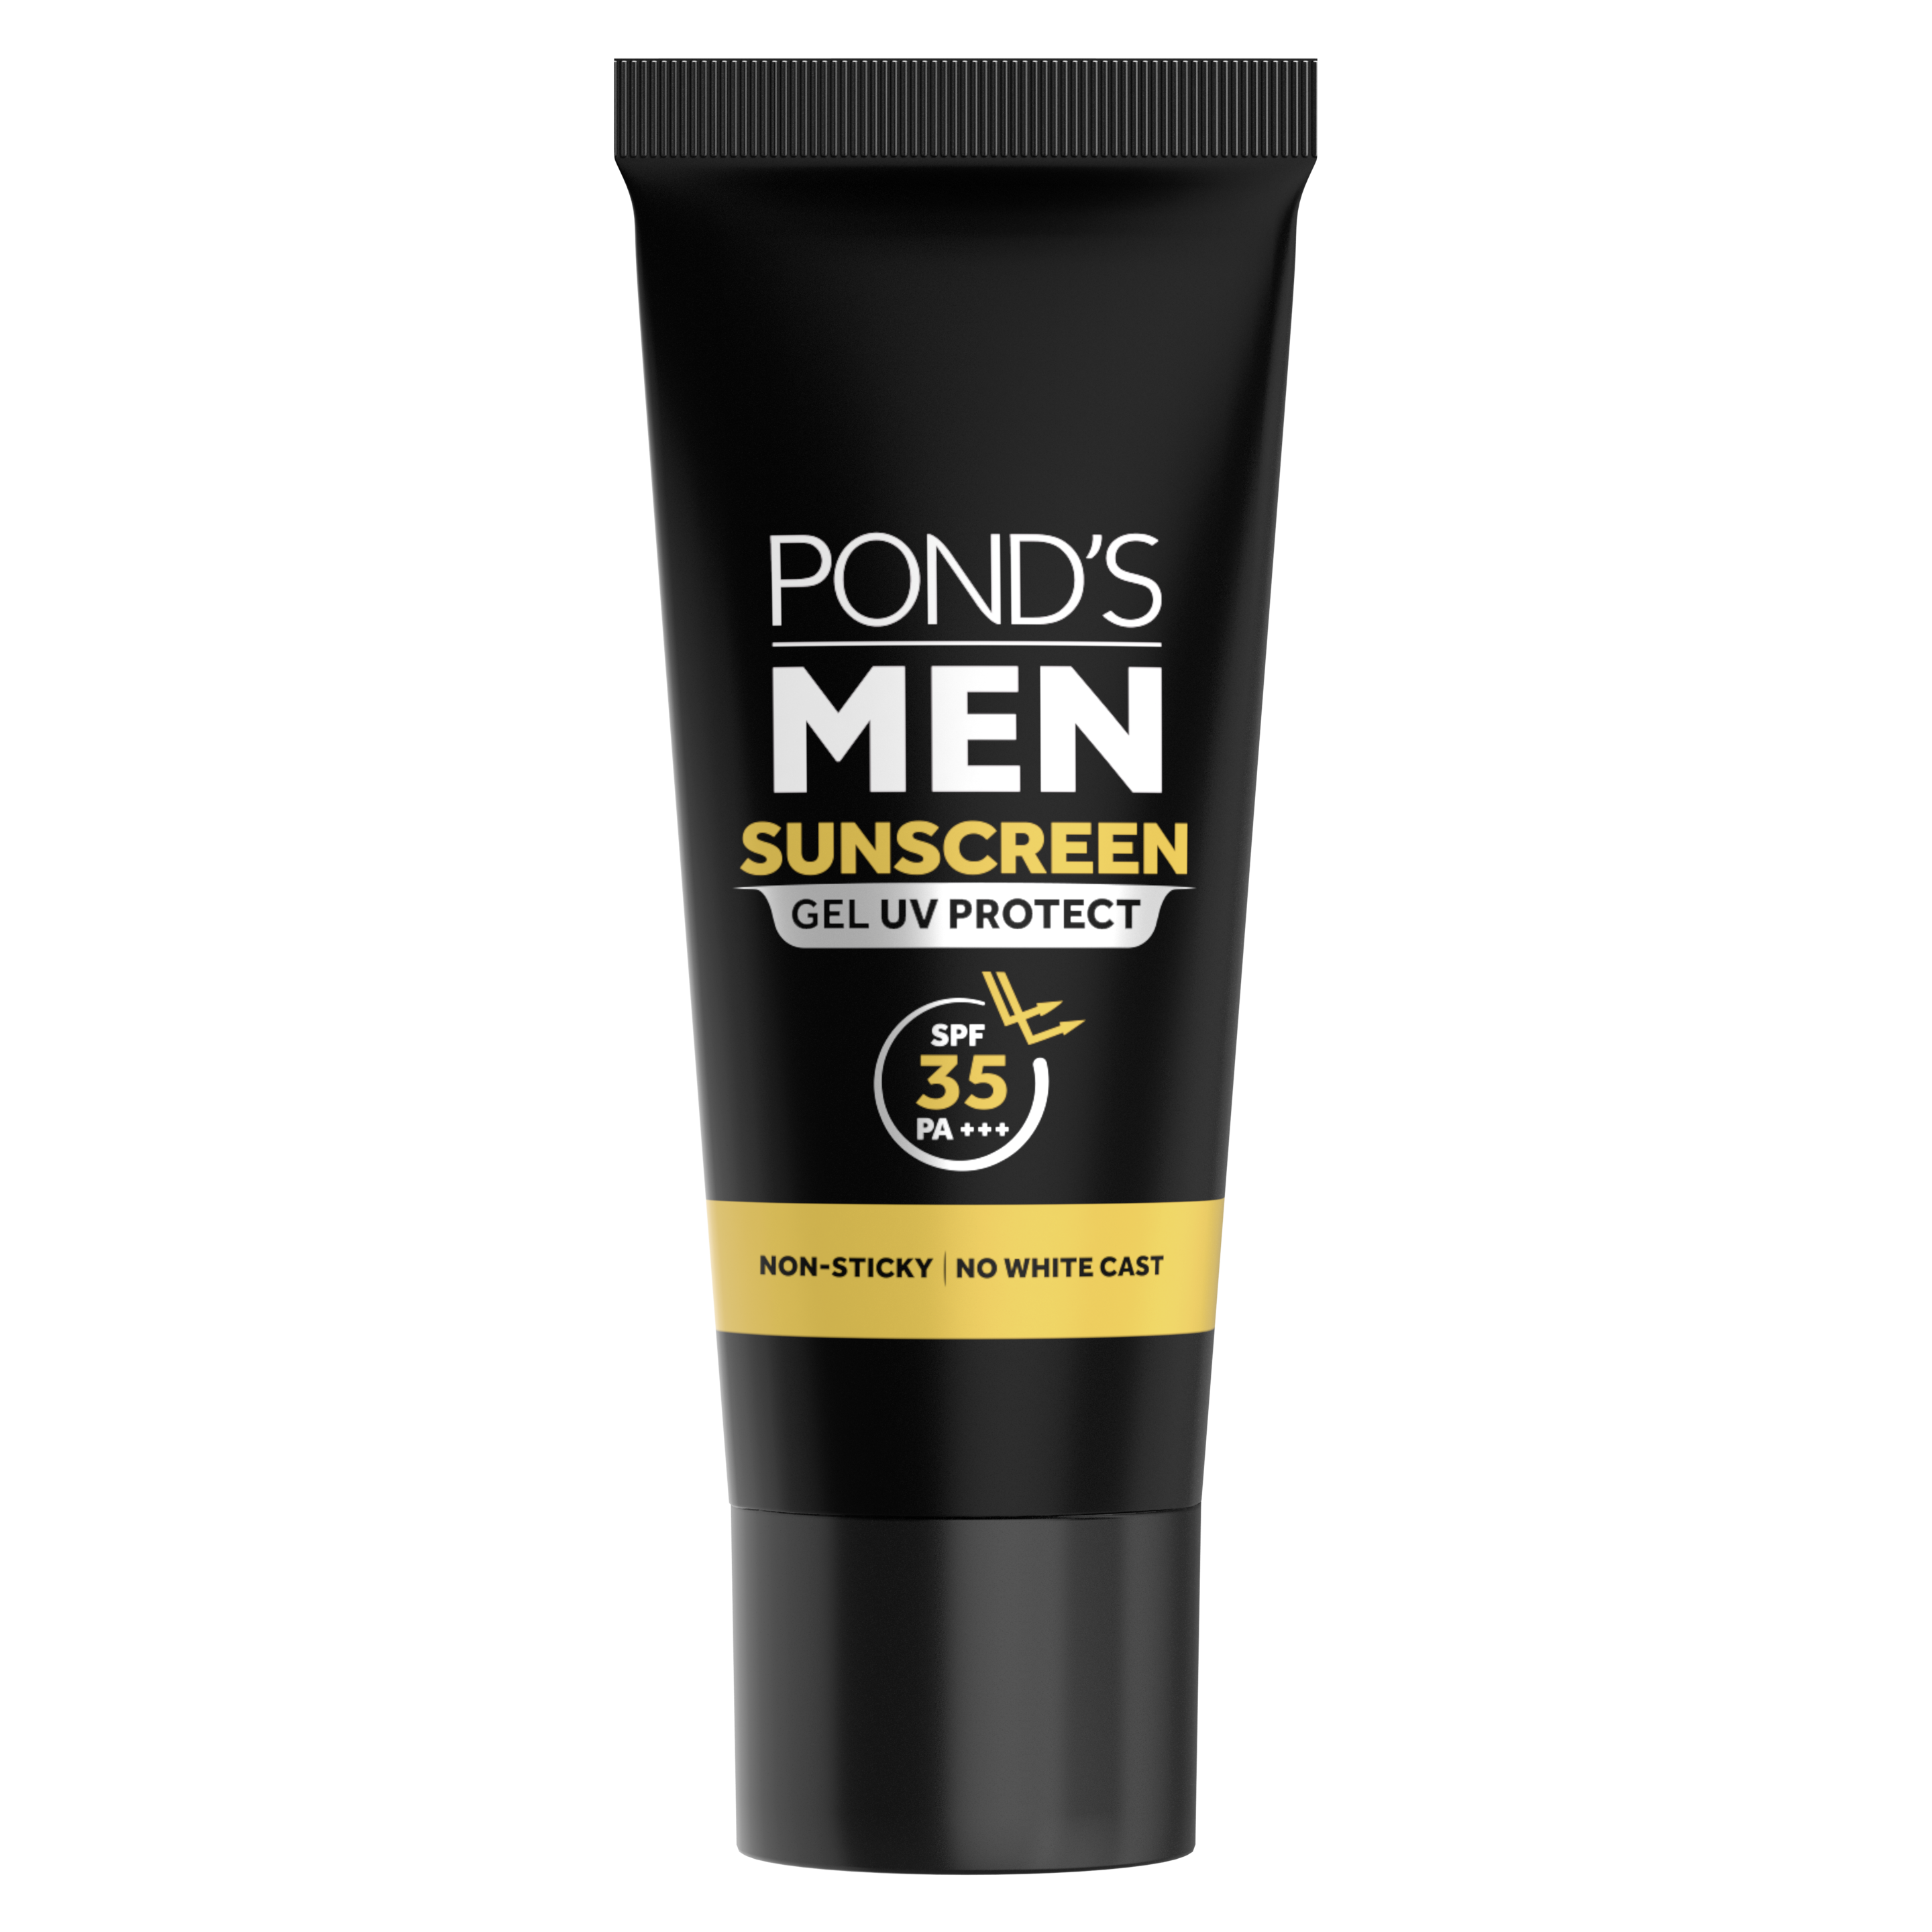 Pons's Men Sunscreen Gel UV Protect